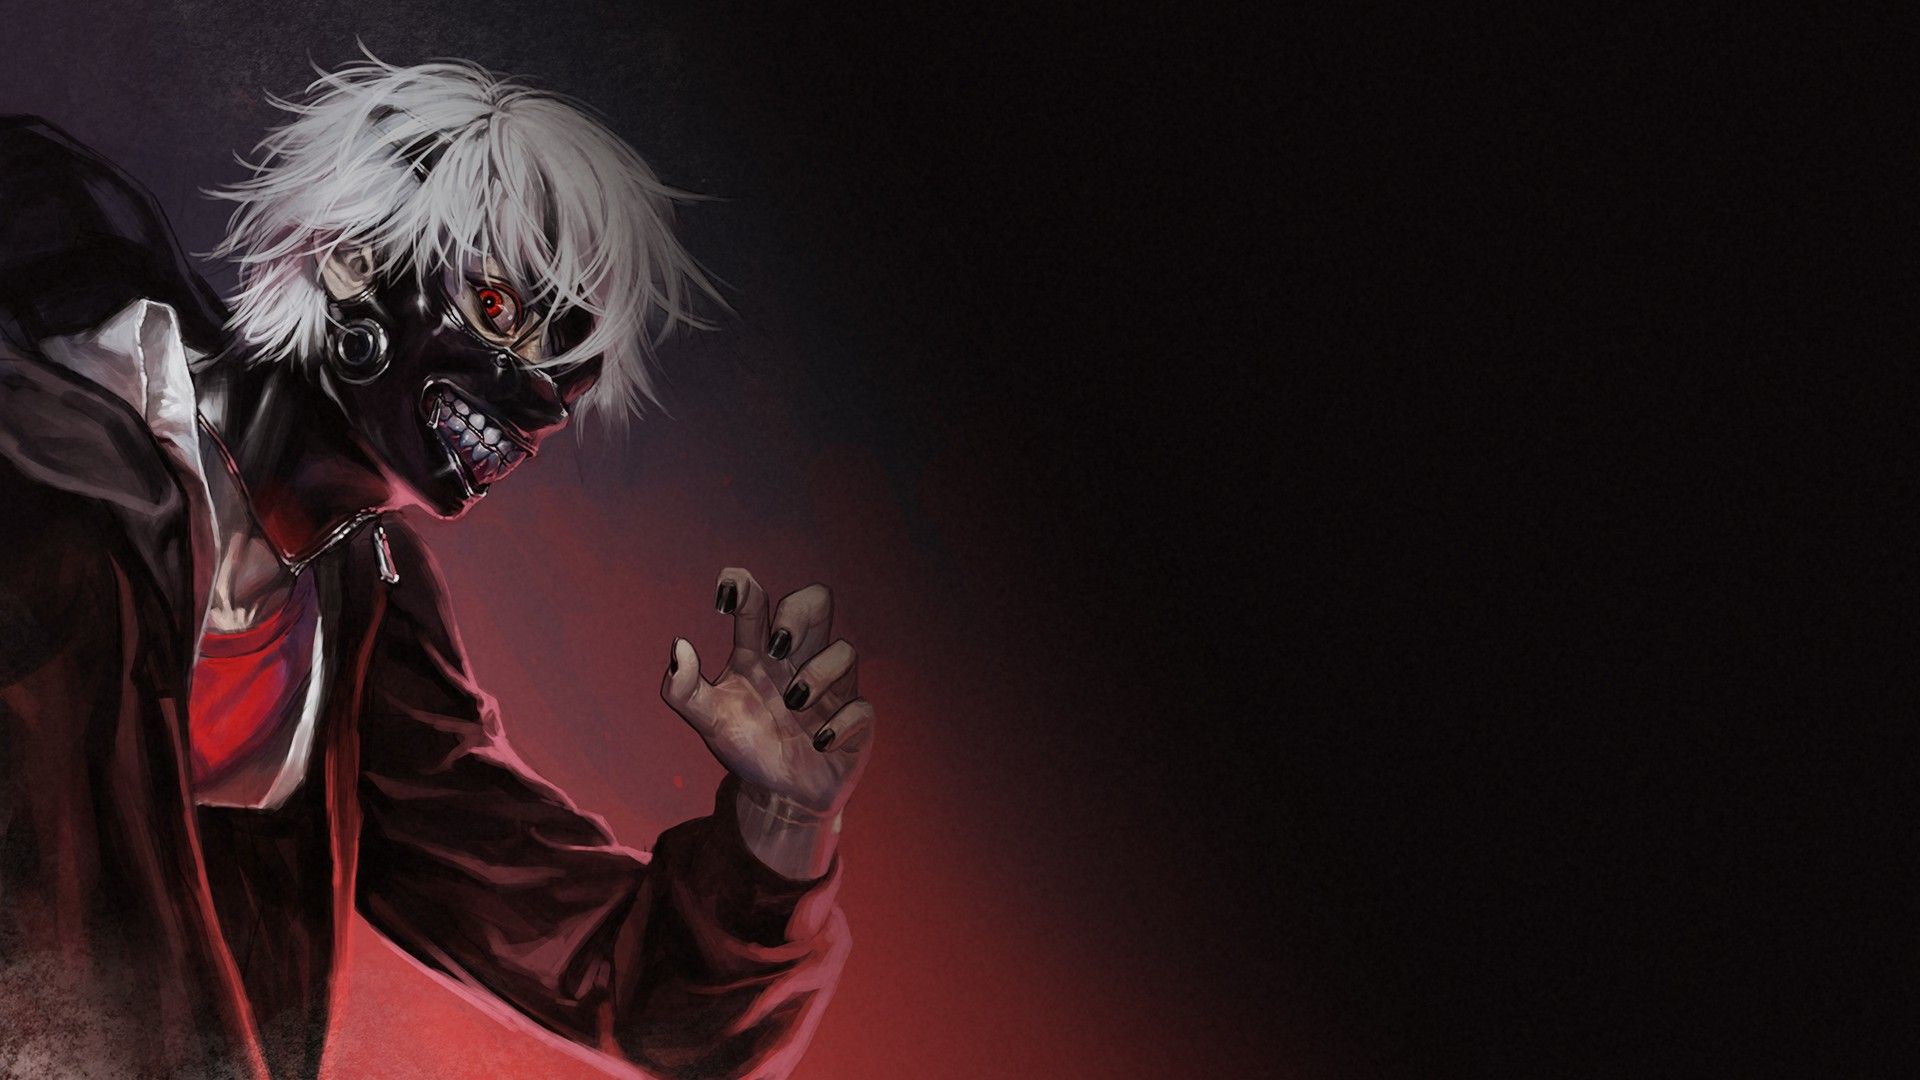 Wallpaper tokyo ghoul, dark, anime boy, artwork desktop wallpaper